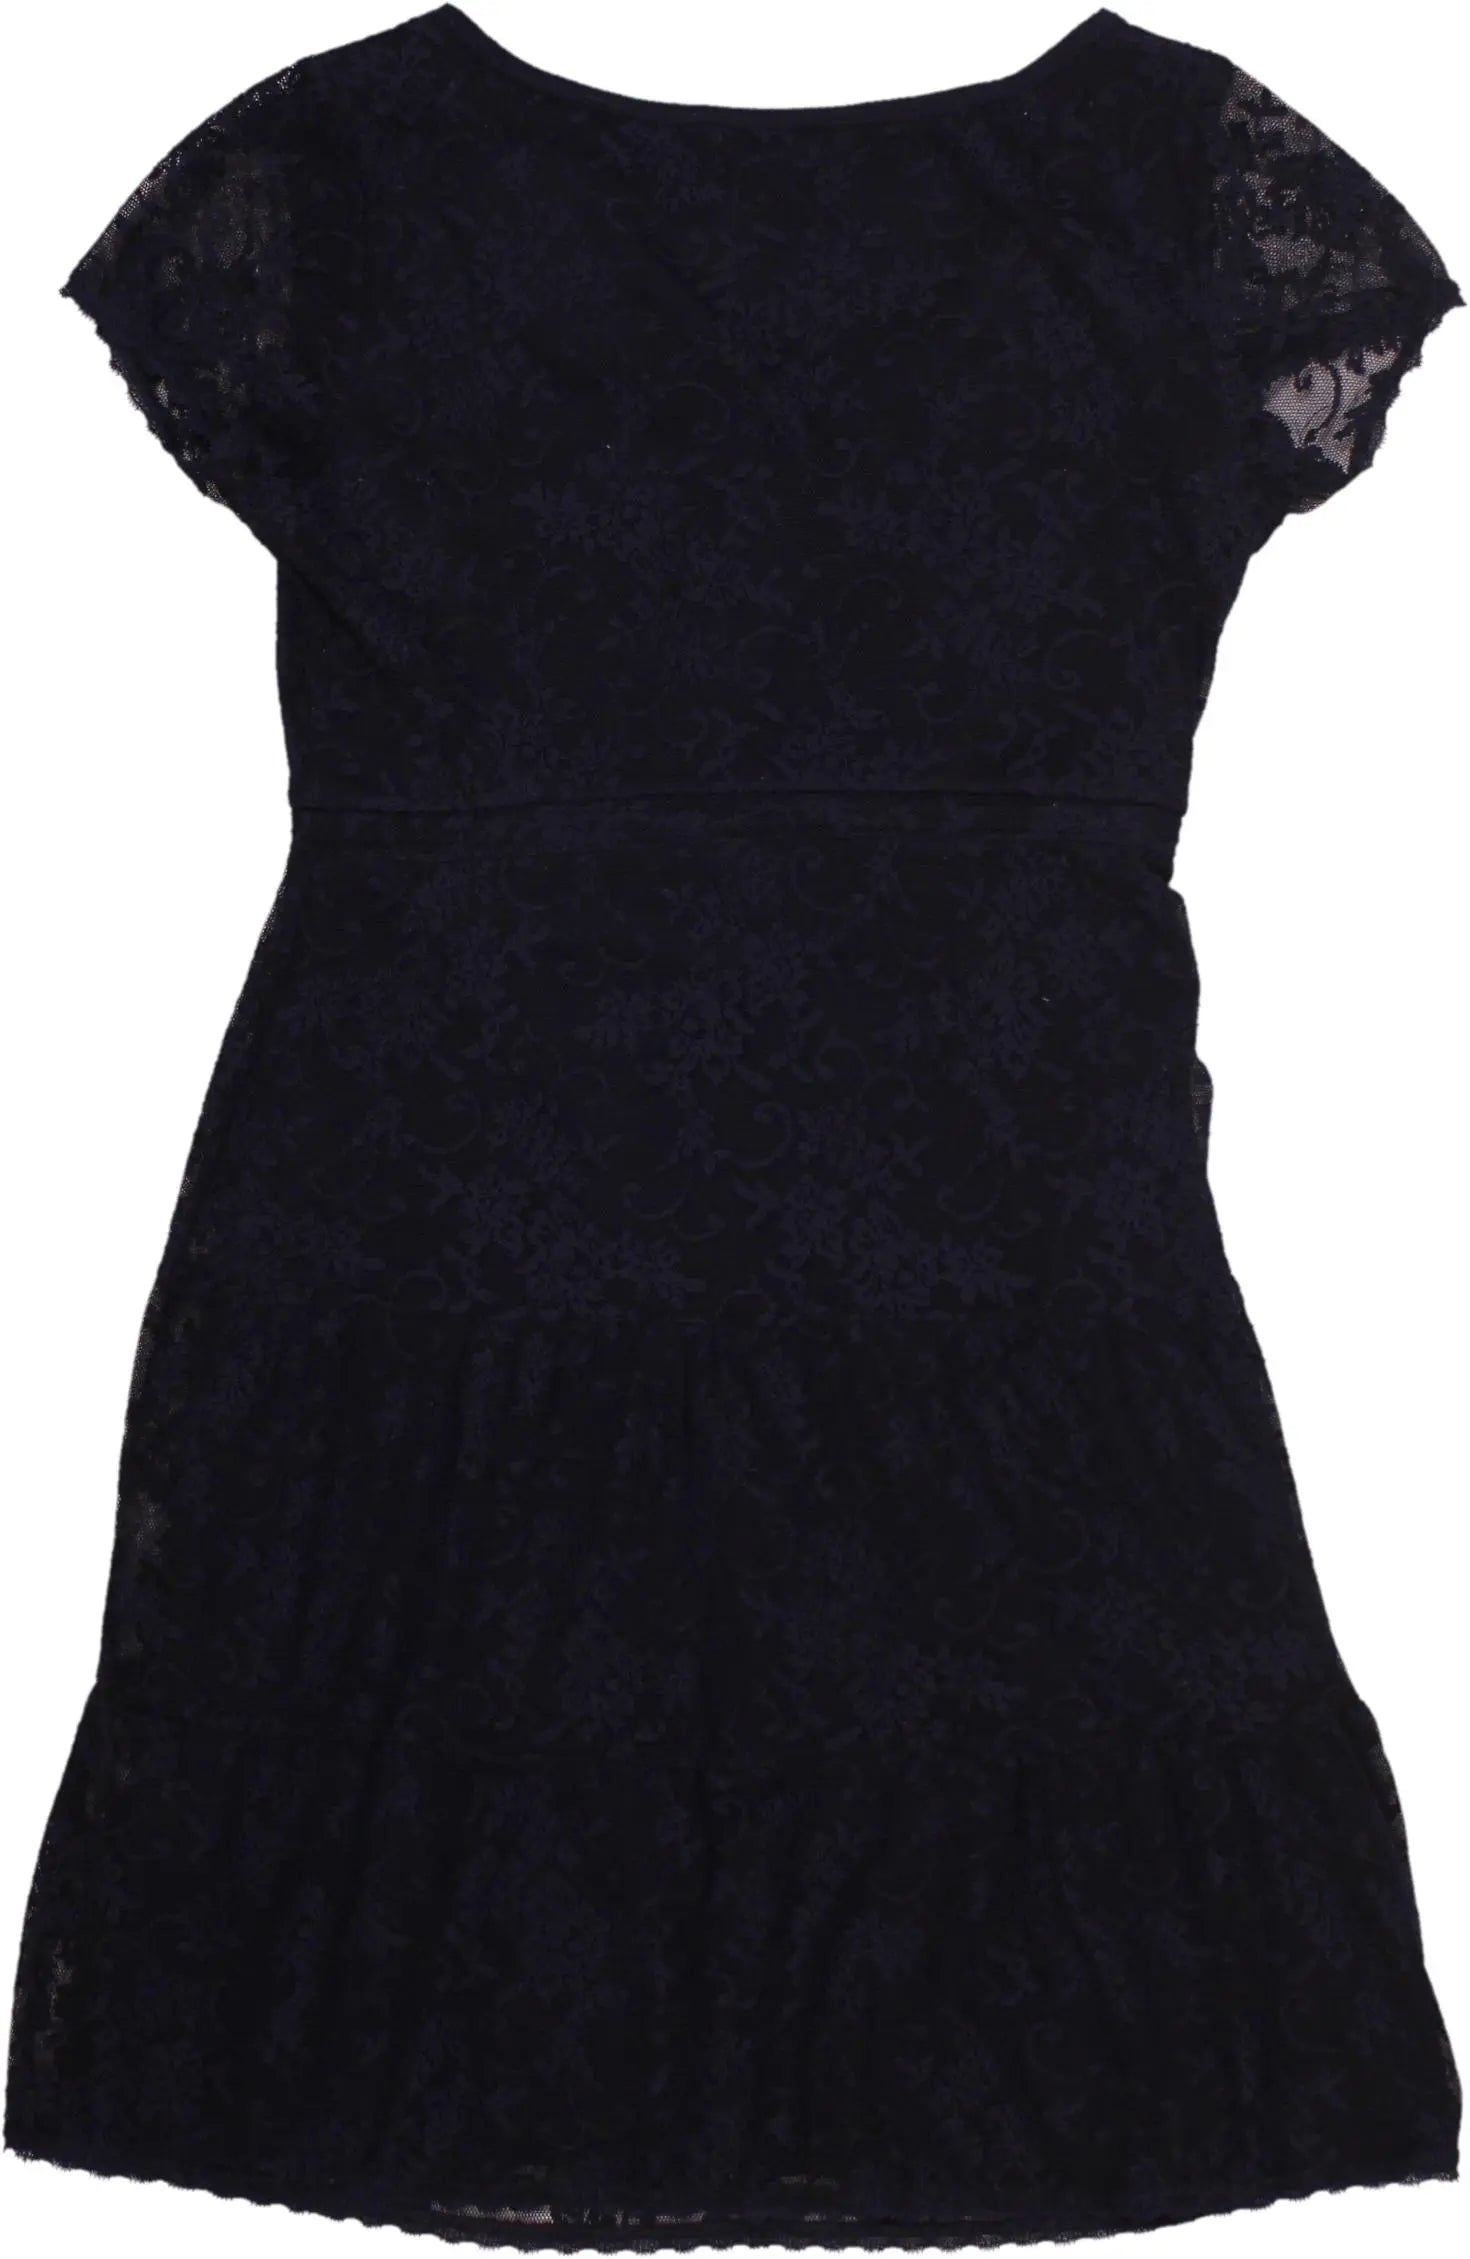 Miss Etam - BLUE12495- ThriftTale.com - Vintage and second handclothing